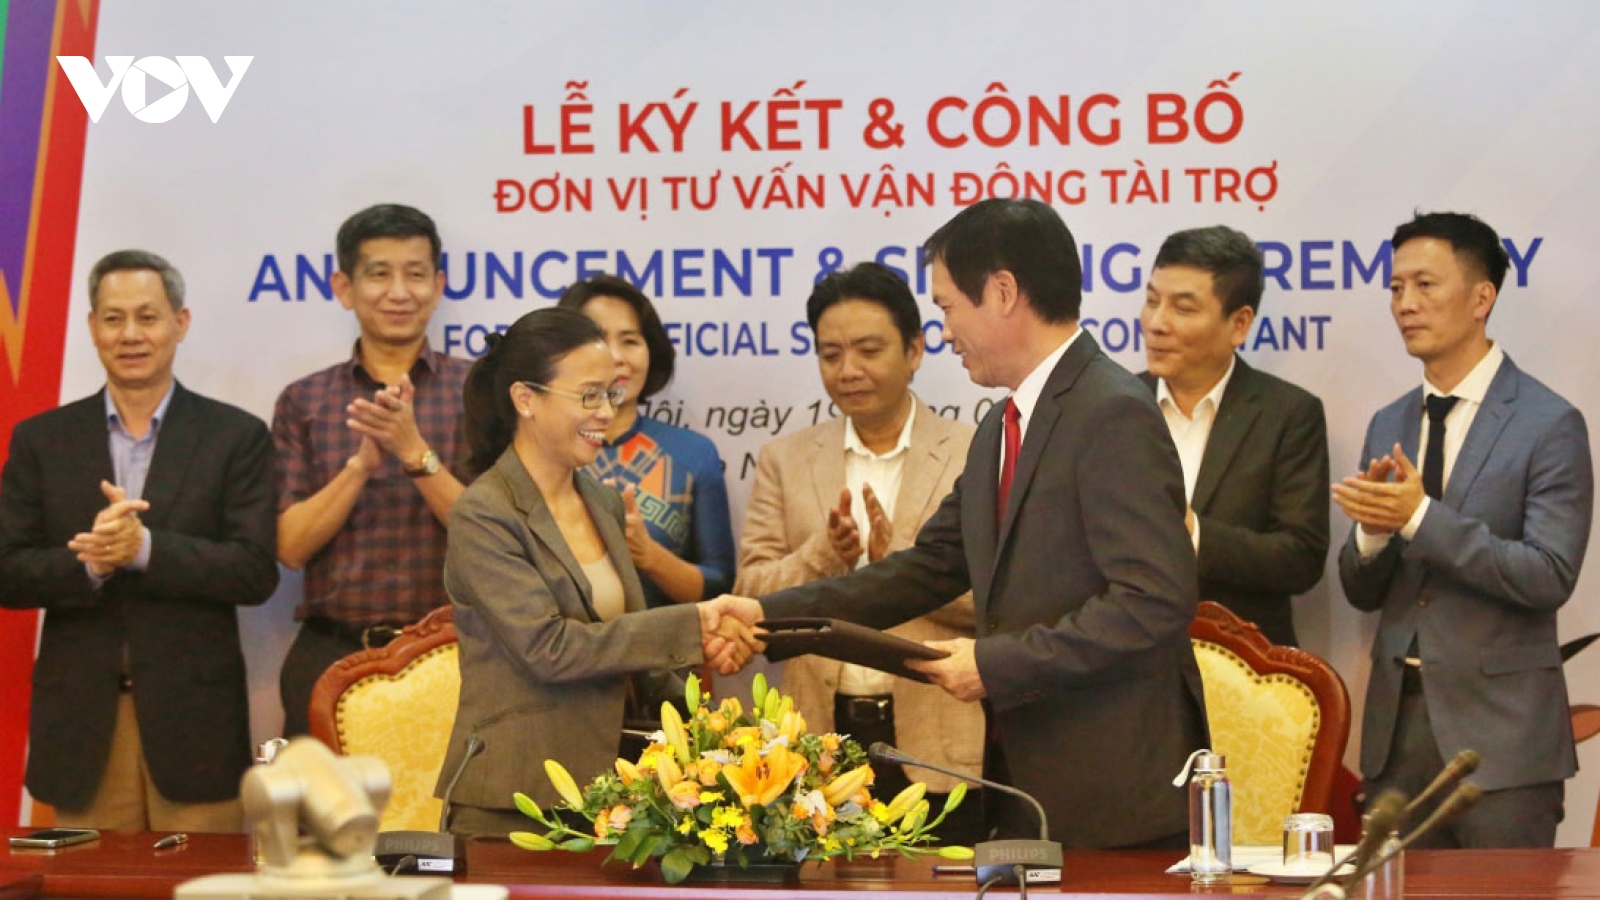 Vietcontent officially sponsors SEA Games 31, ASEAN Para Games 11 